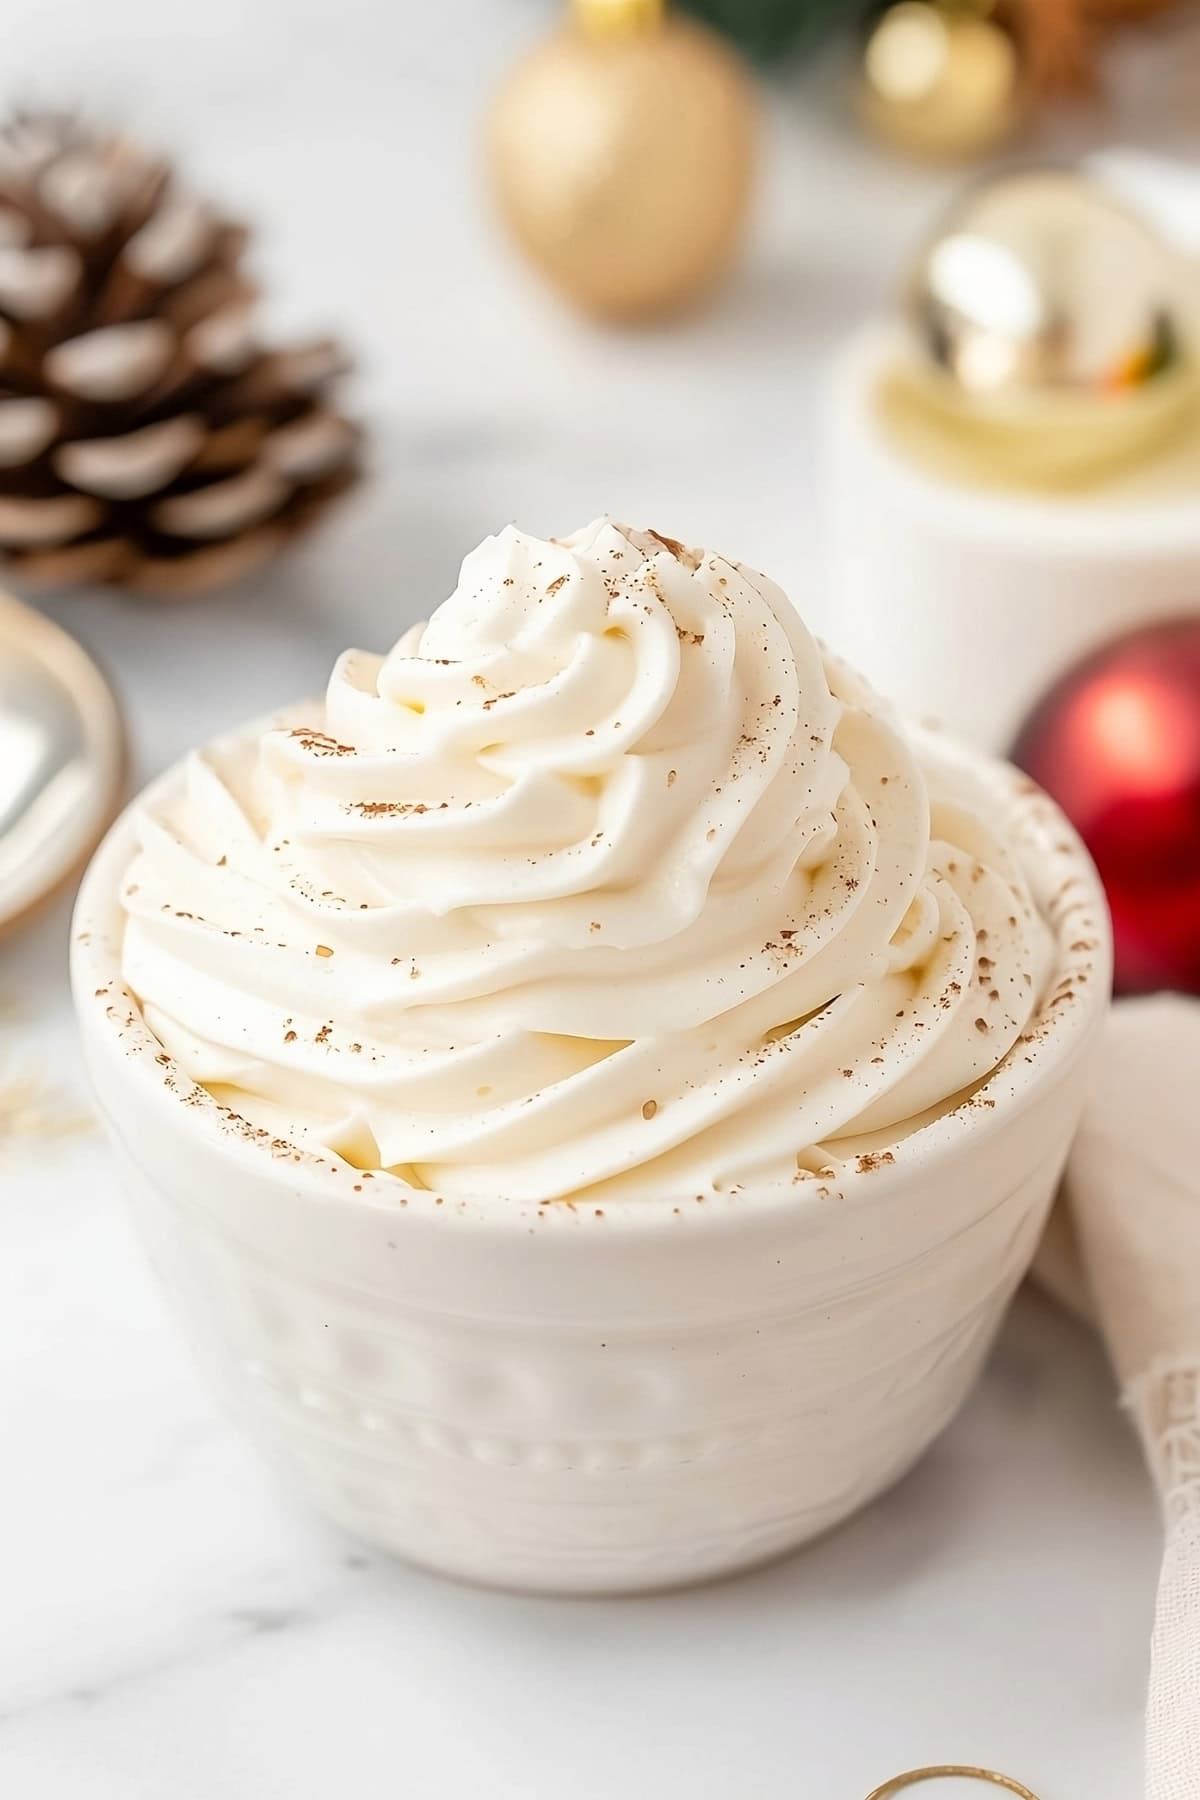 Eggnog whipped cream in a white bowl.